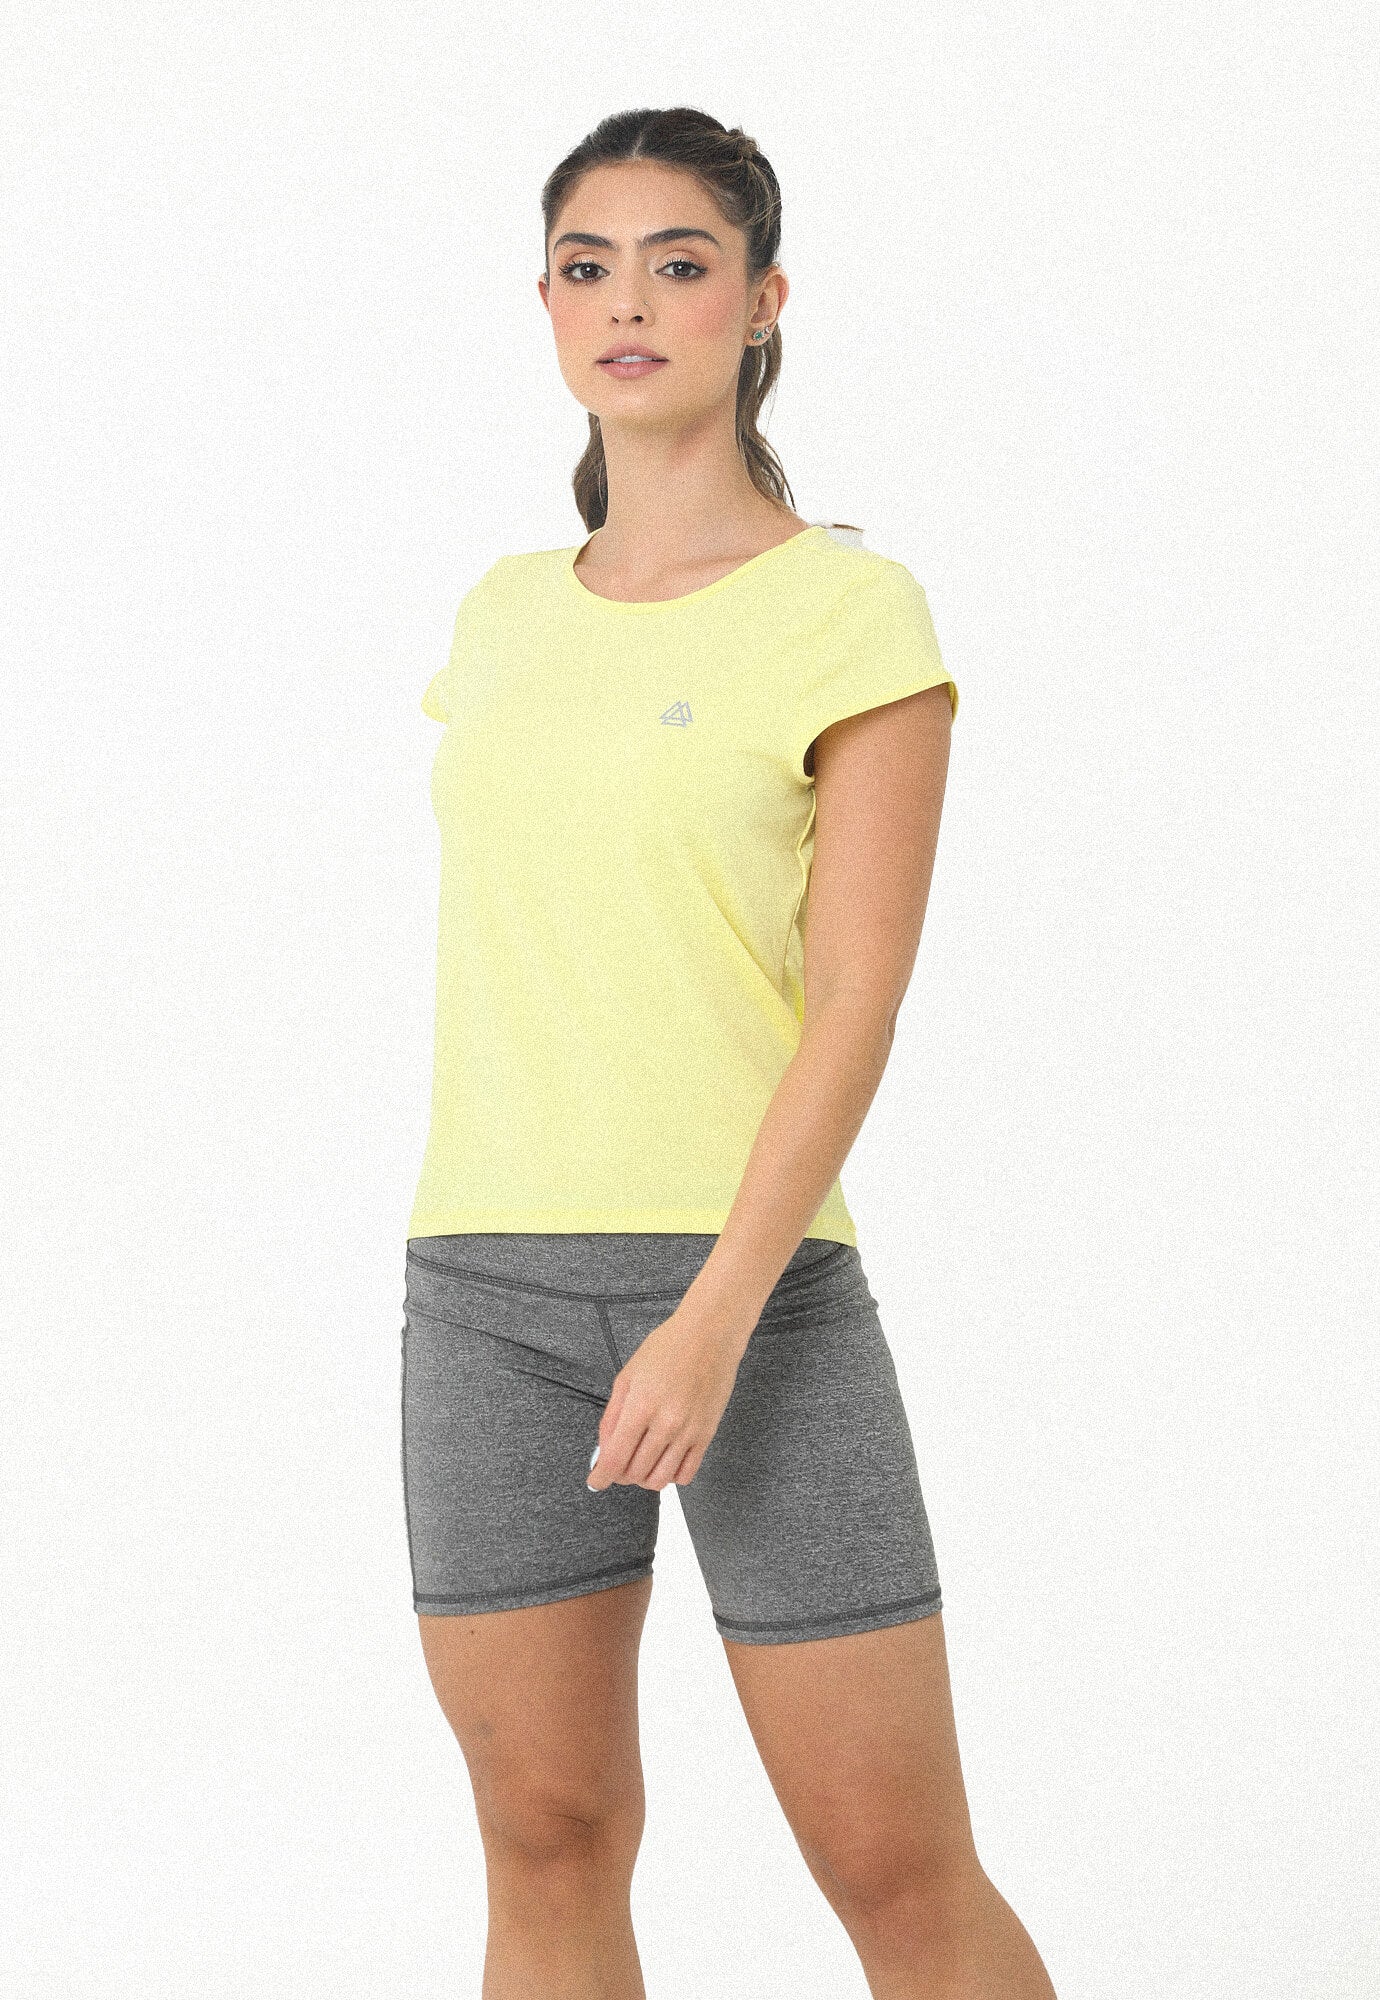 Camiseta deportiva amarilla para mujer